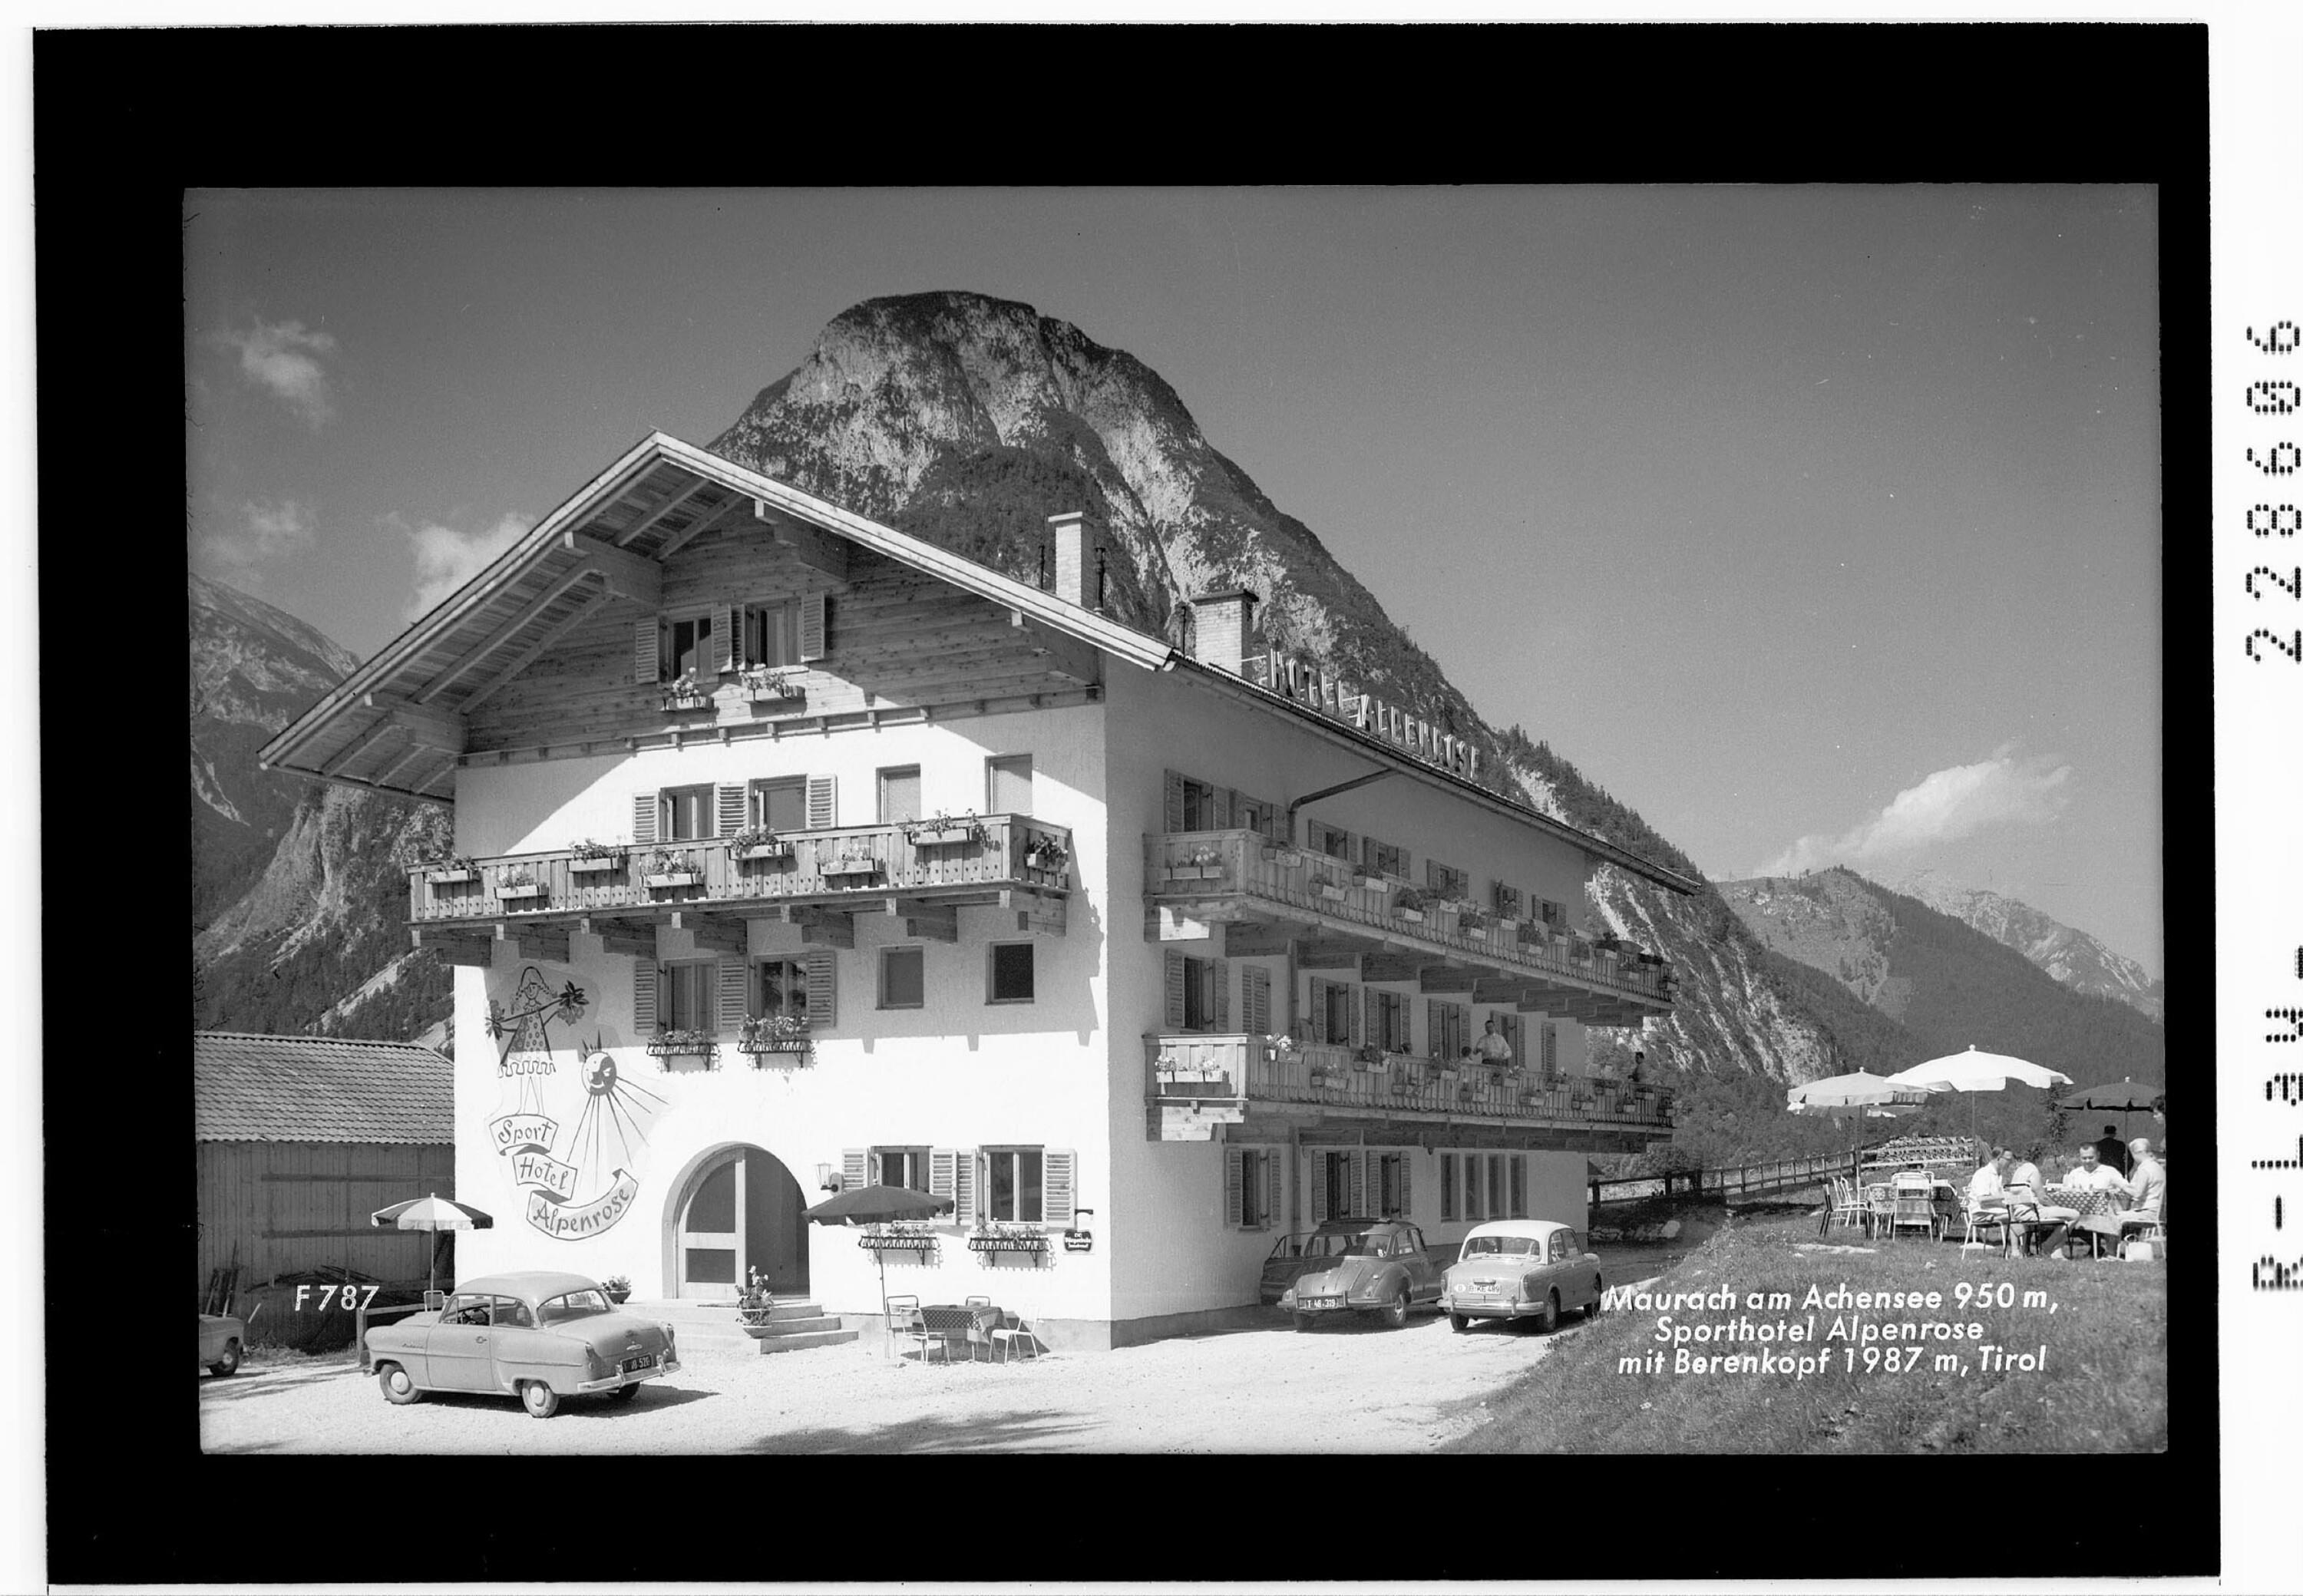 Maurach am Achensee 950 m / Sporthotel Alpenrose mit Bärenkopf 1987 m / Tirol></div>


    <hr>
    <div class=